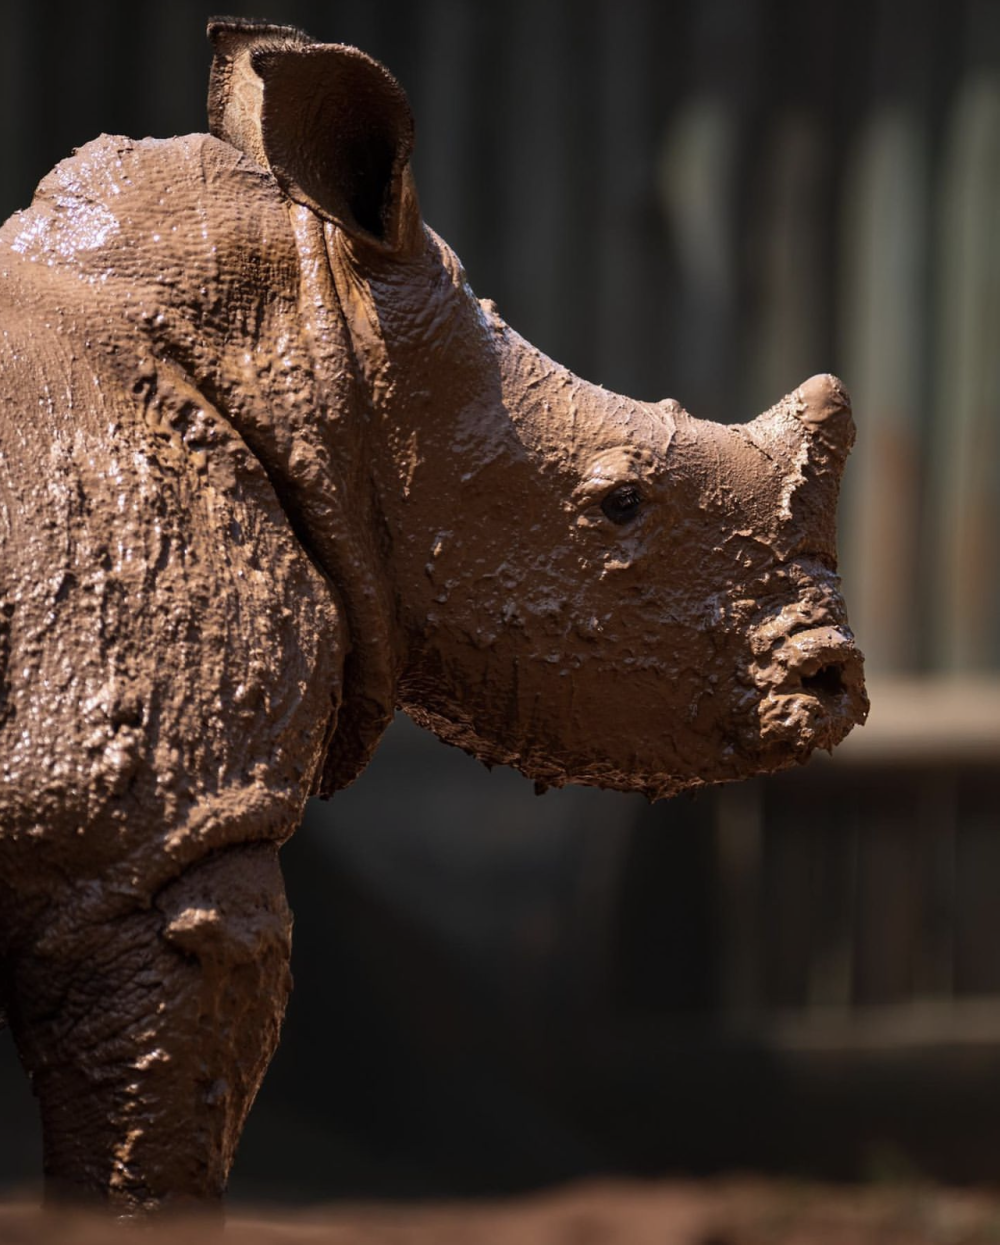 Mavic's journey – the orphan rhino's road to recovery